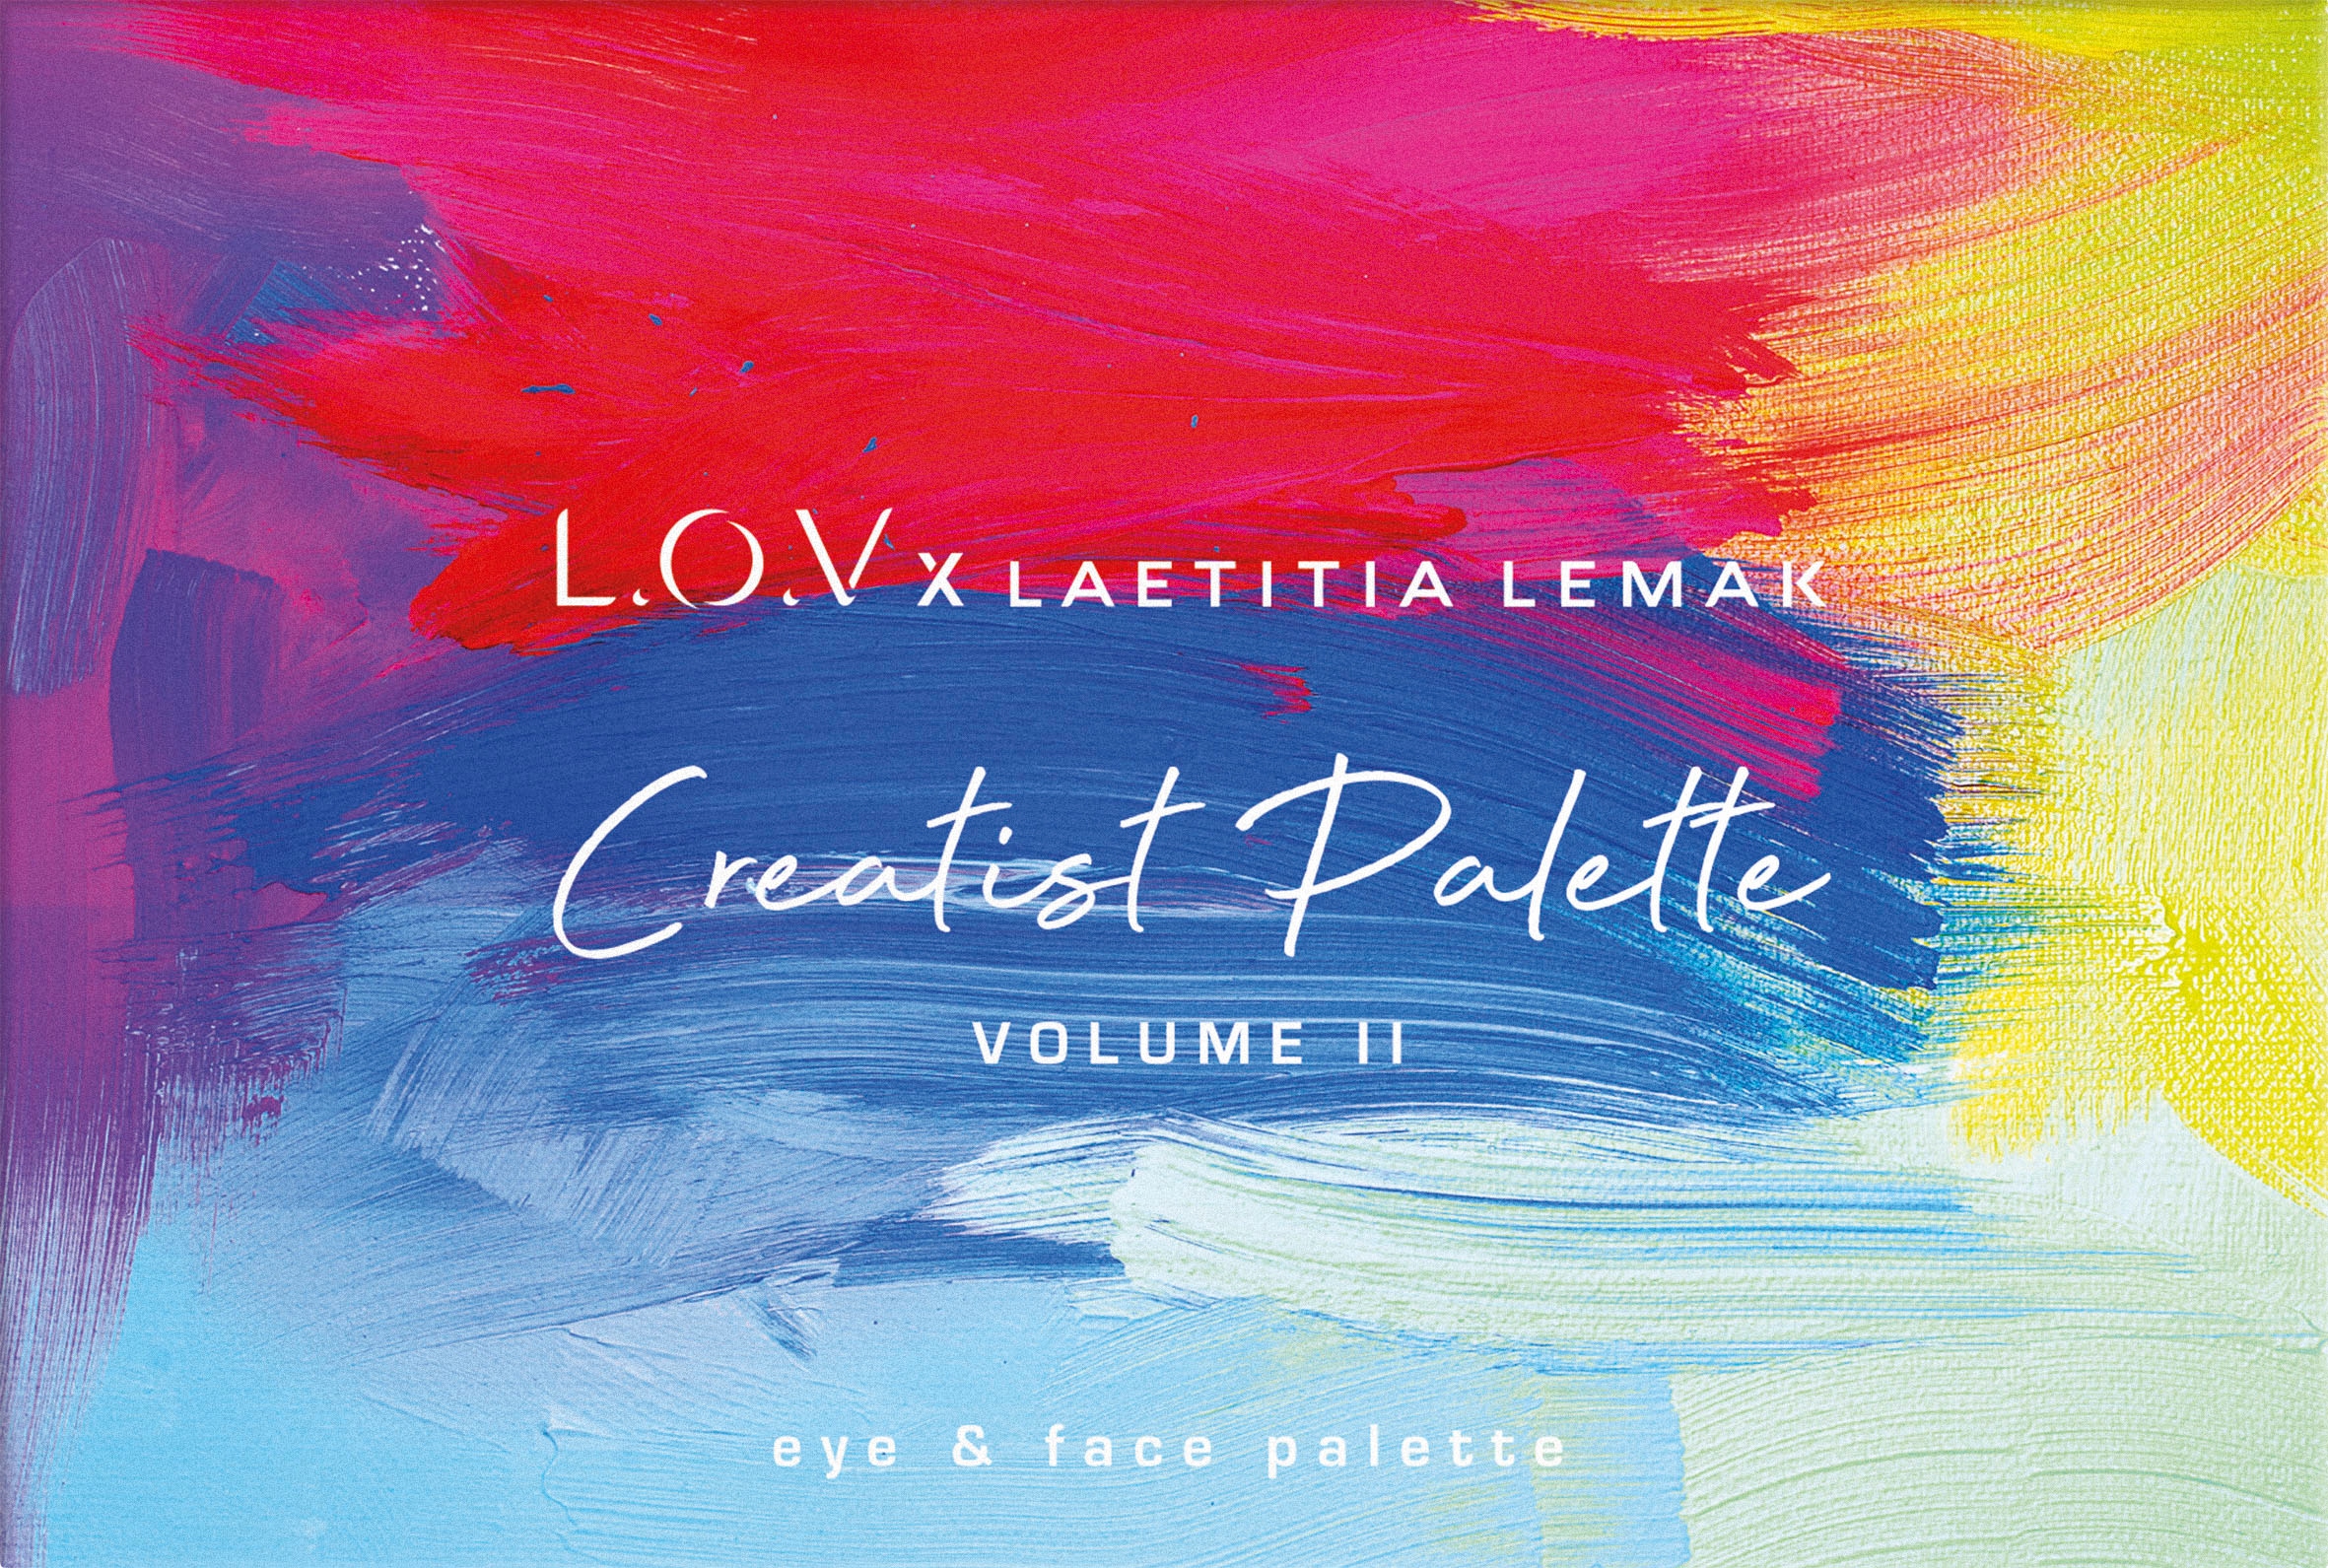 L.O.V Lidschatten-Palette »L.O.V online II PALETTE eye x kaufen CREATIST & LEMAK palette« LAETITIA Volume face